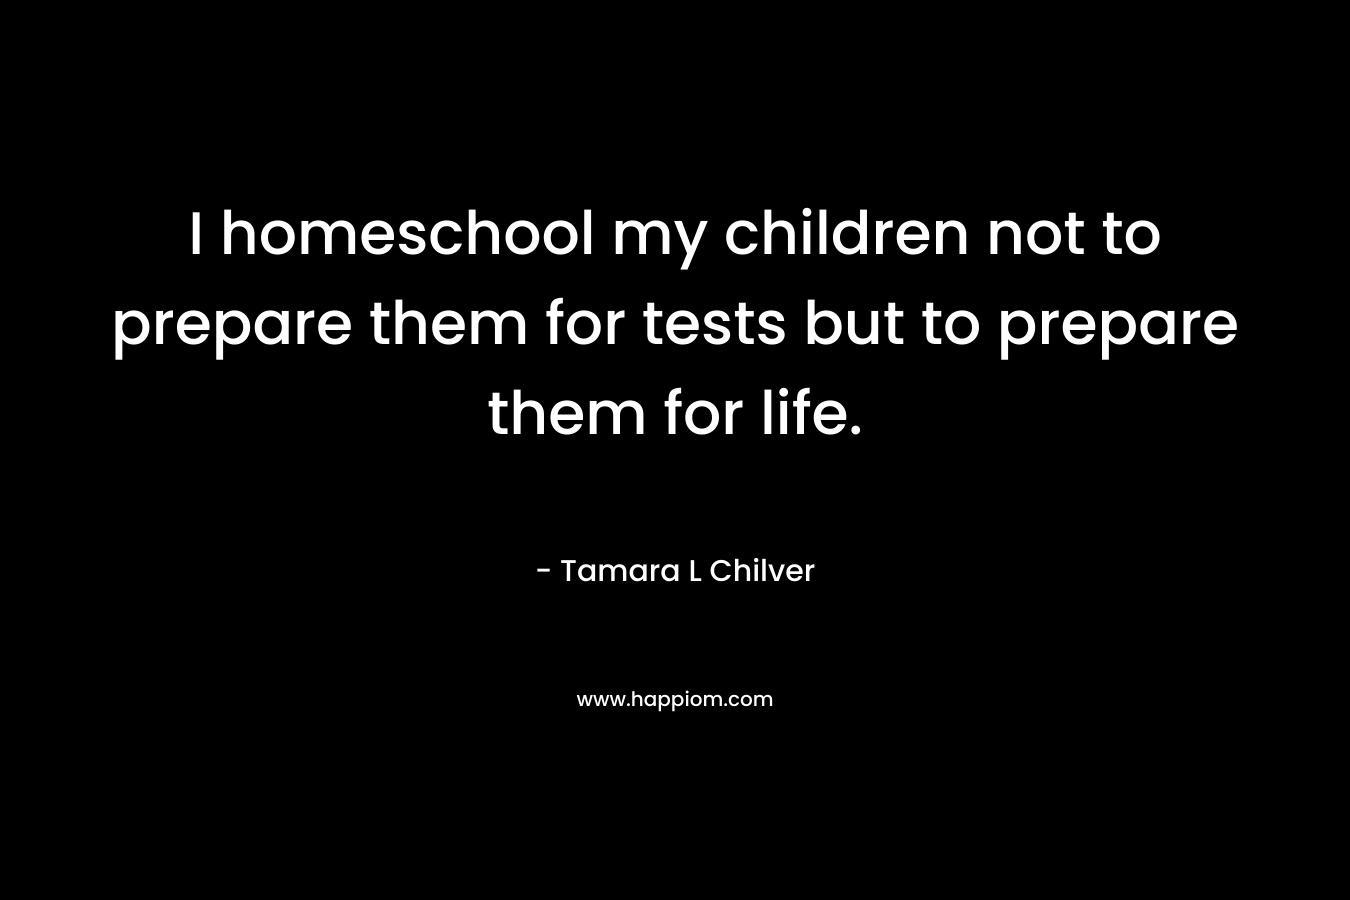 I homeschool my children not to prepare them for tests but to prepare them for life.